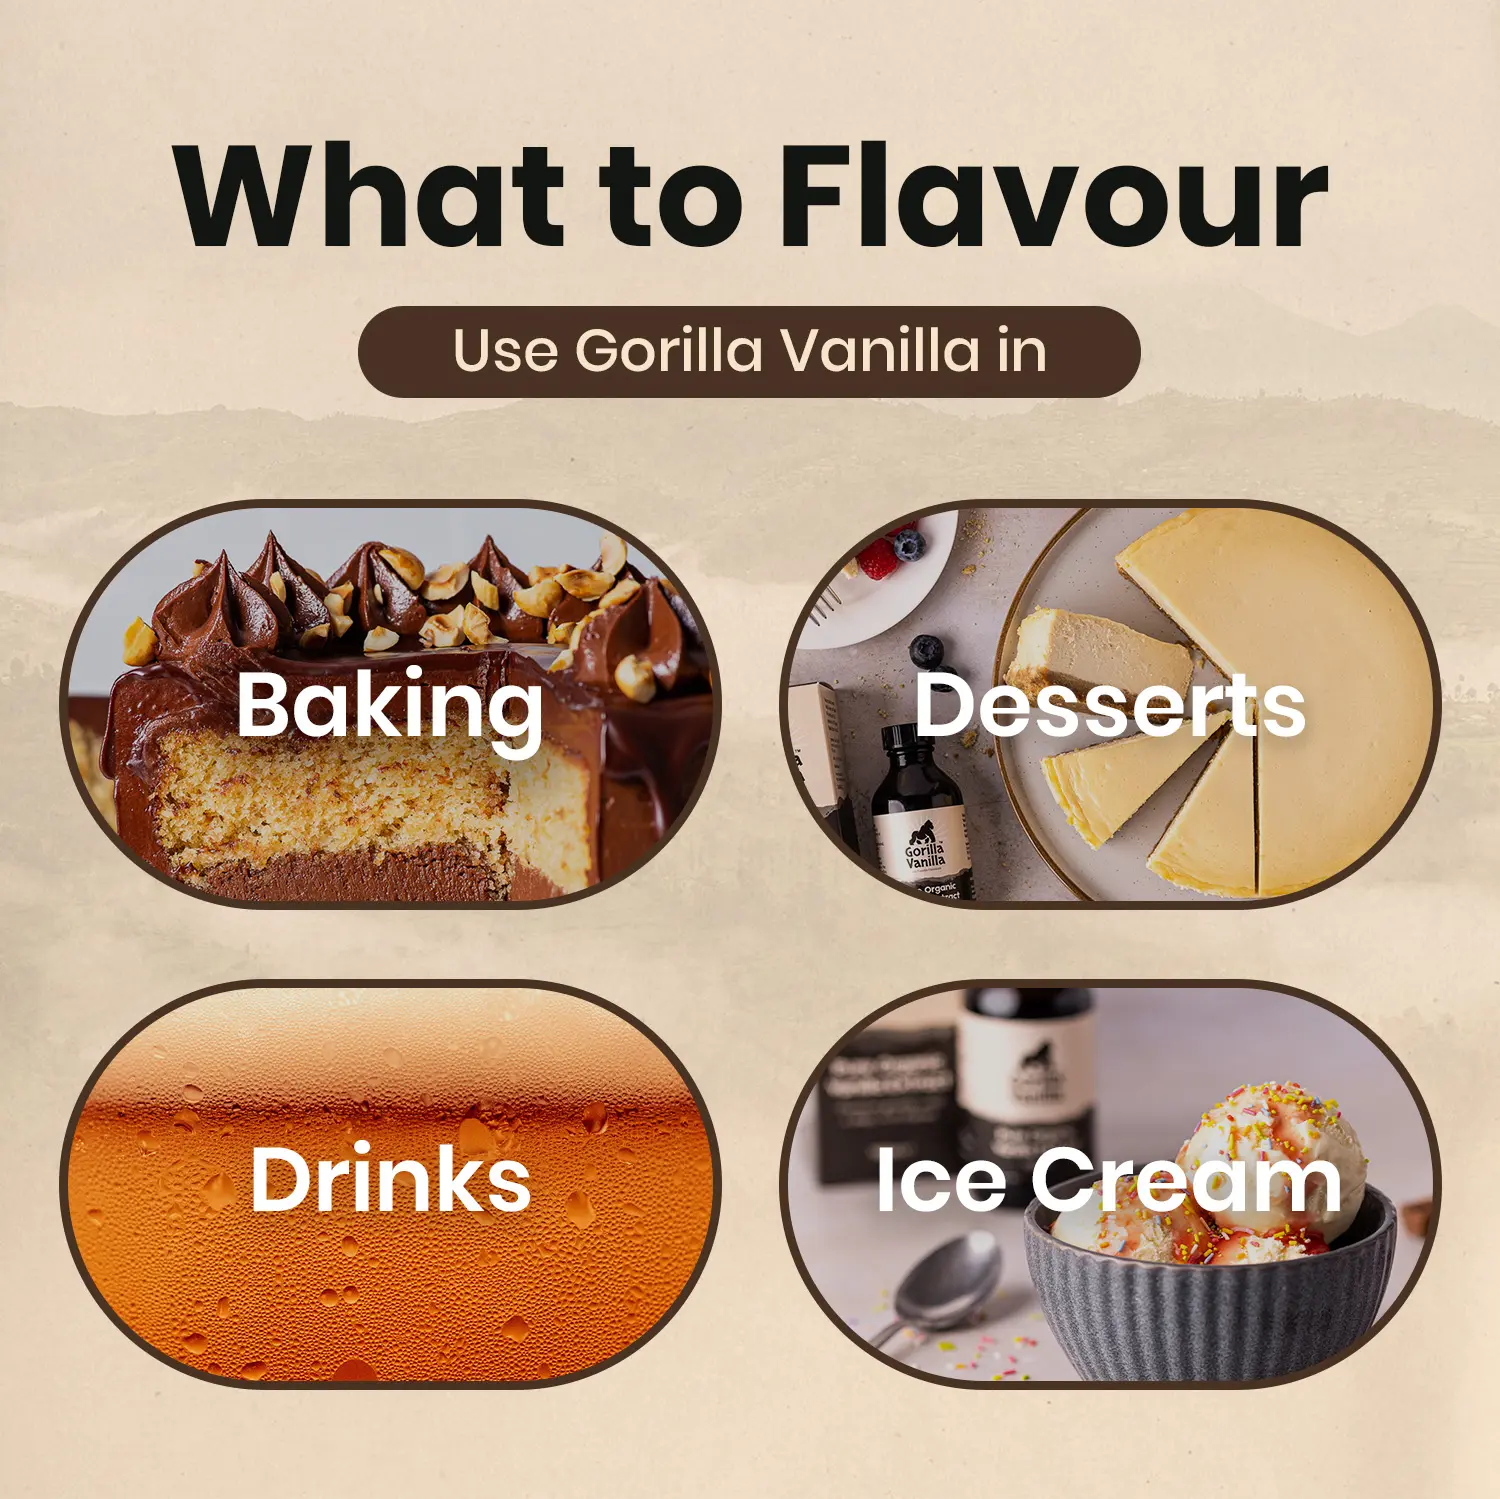 Gorilla Vanilla - Organic Vanilla Extract - Use In